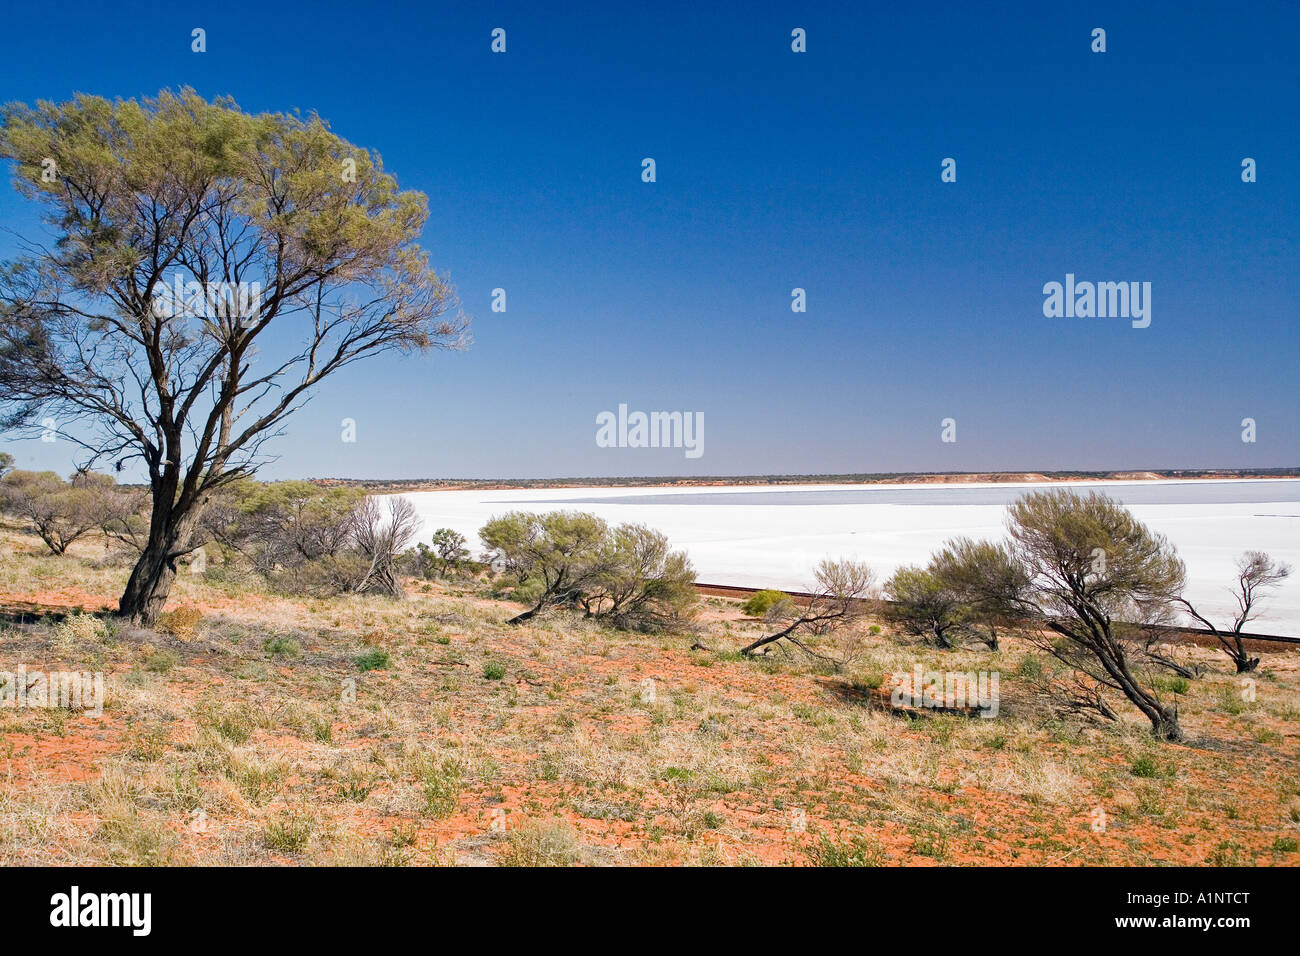 Lake Hart Stuart Highway near Woomera Outback South Australia Australia Stock Photo